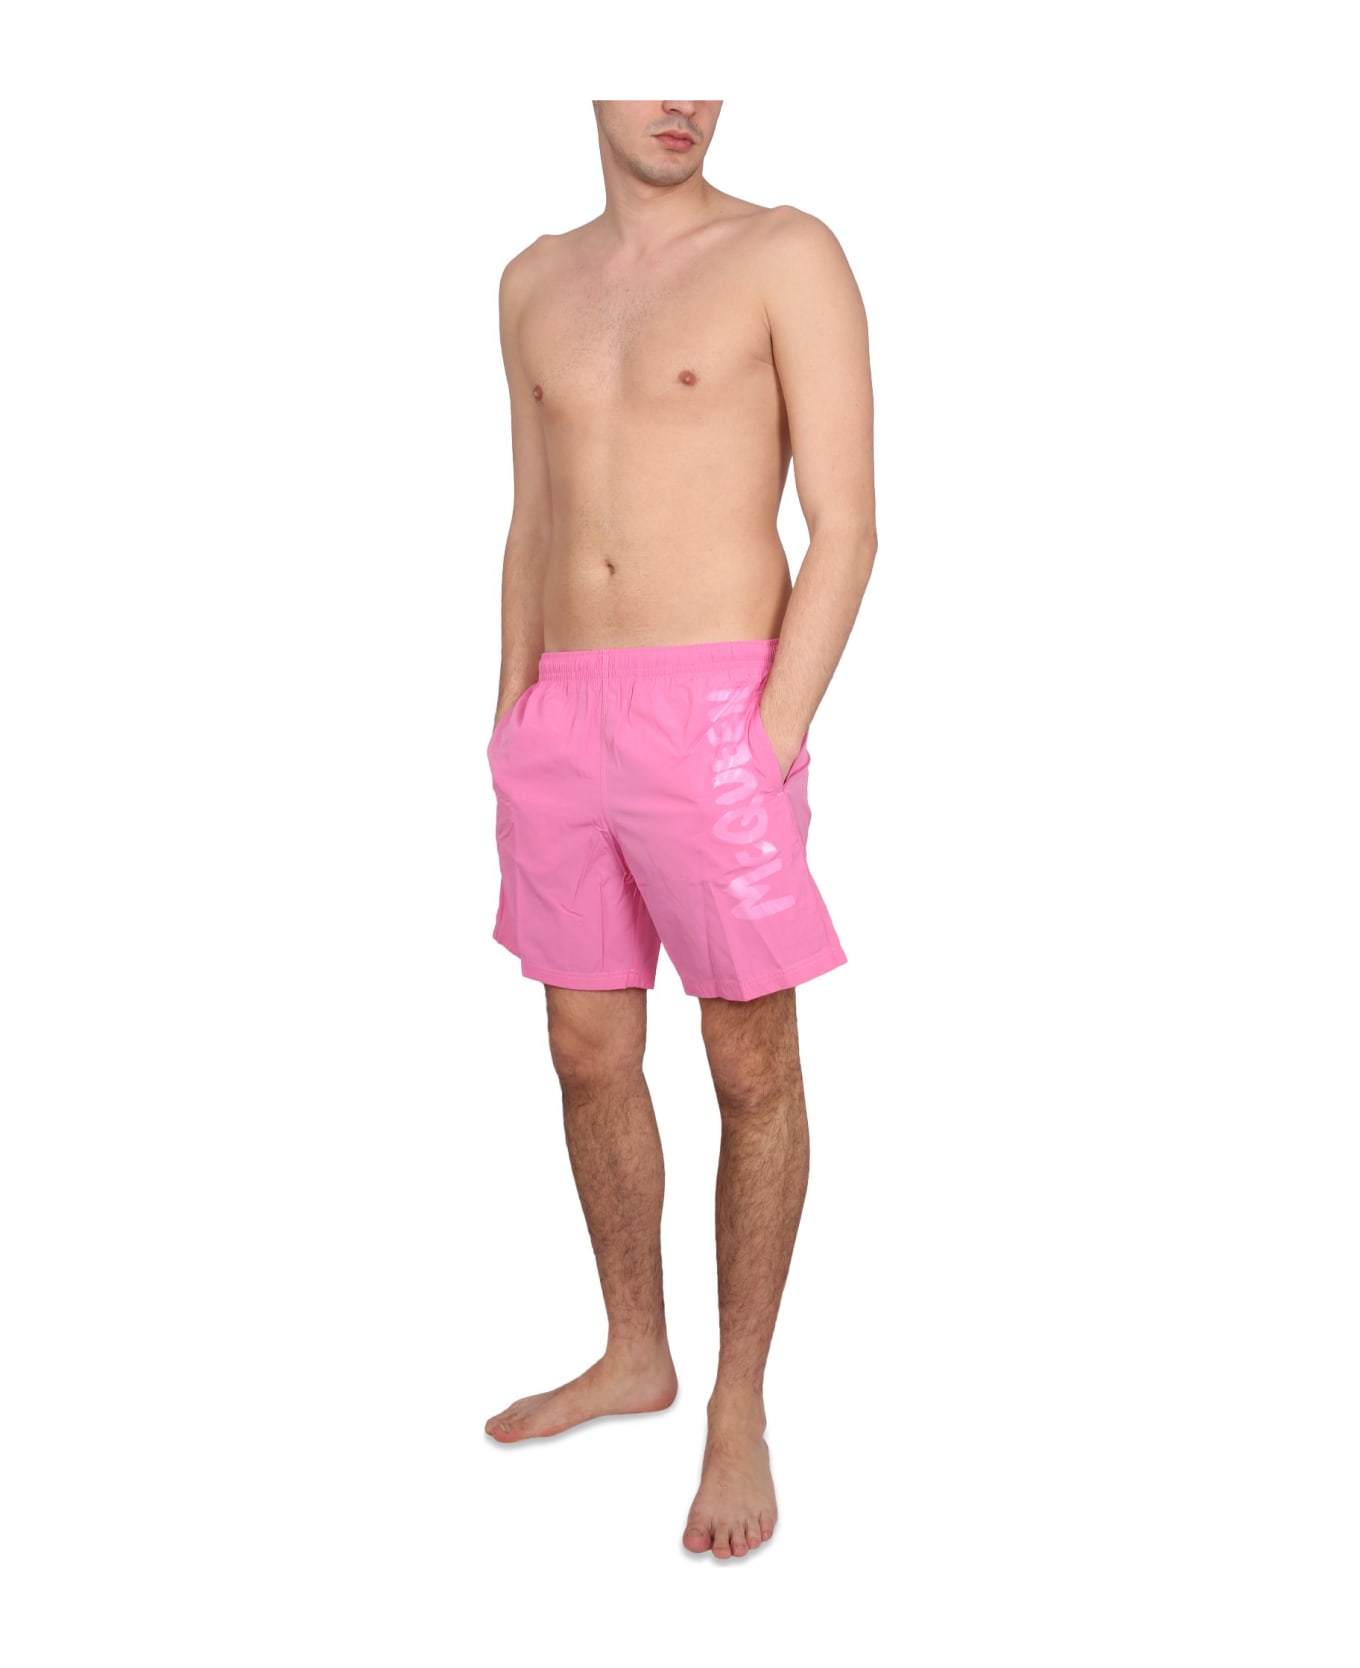 Alexander McQueen Swim Trunks - Pink